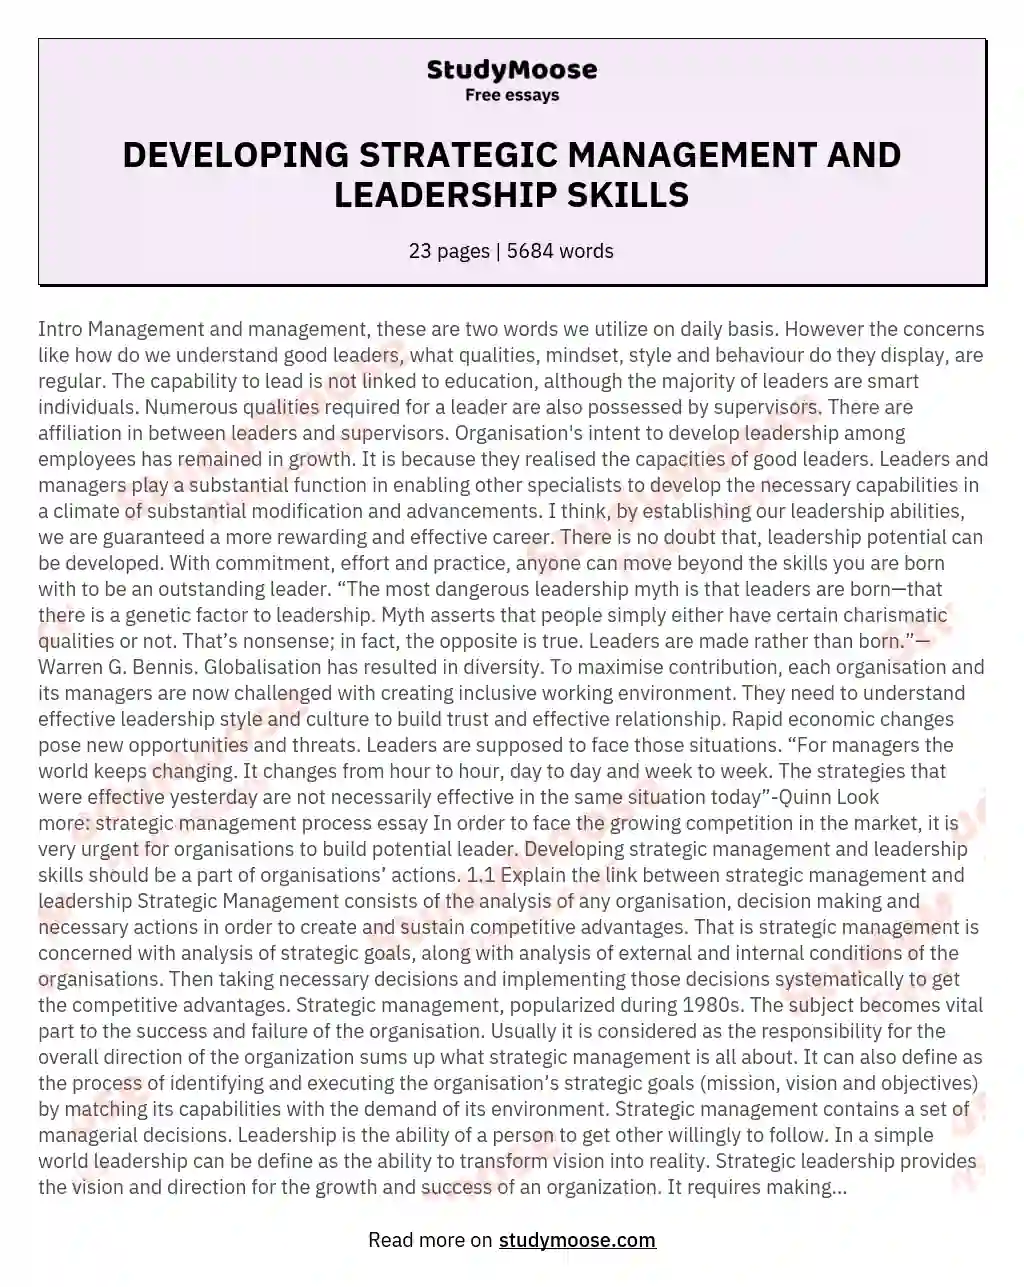 DEVELOPING STRATEGIC MANAGEMENT AND LEADERSHIP SKILLS essay